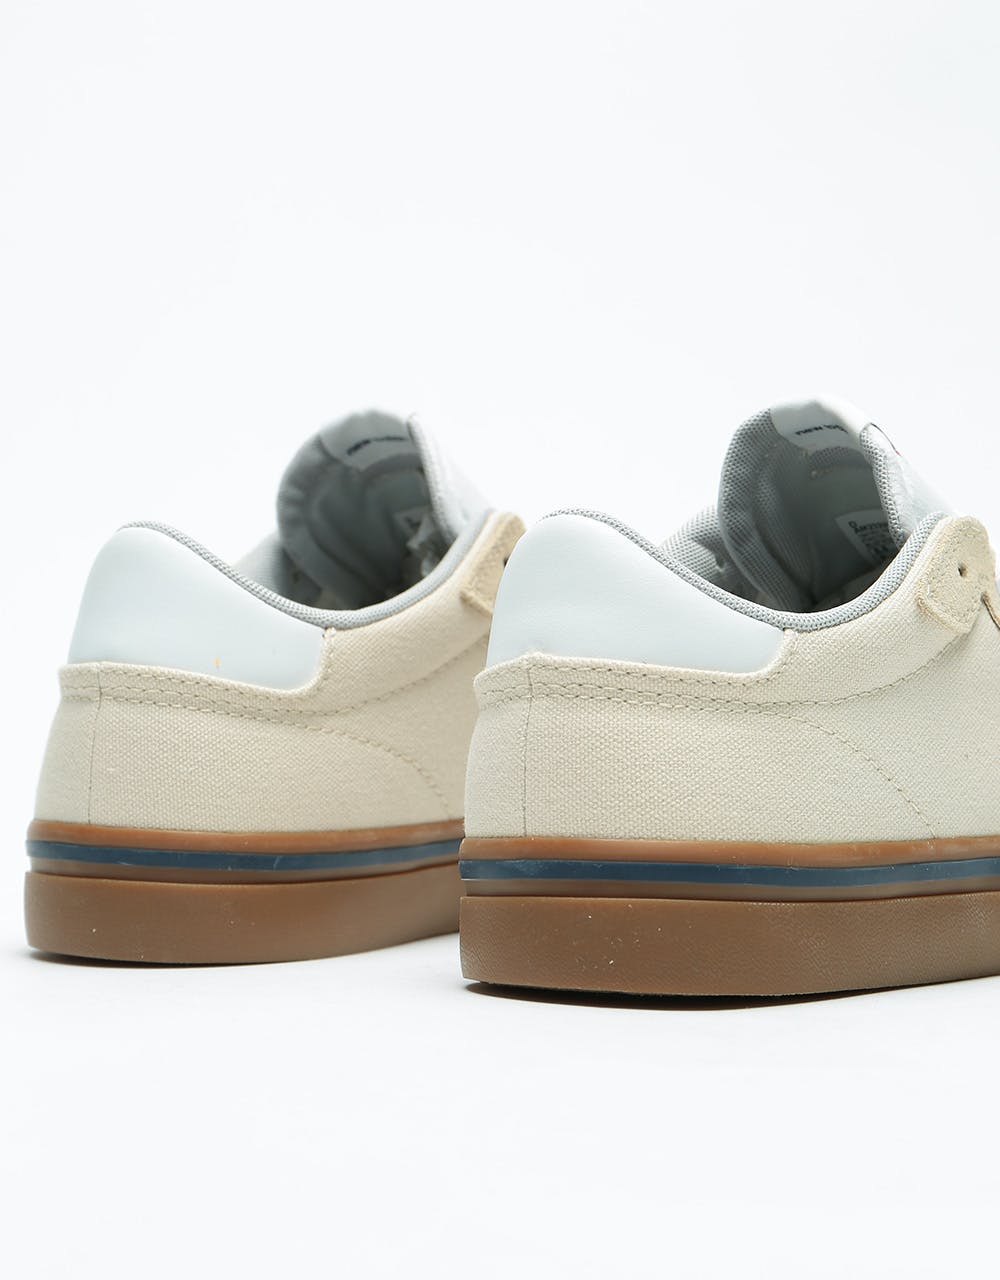 New Balance AM232 Skate Shoes - White/Gum